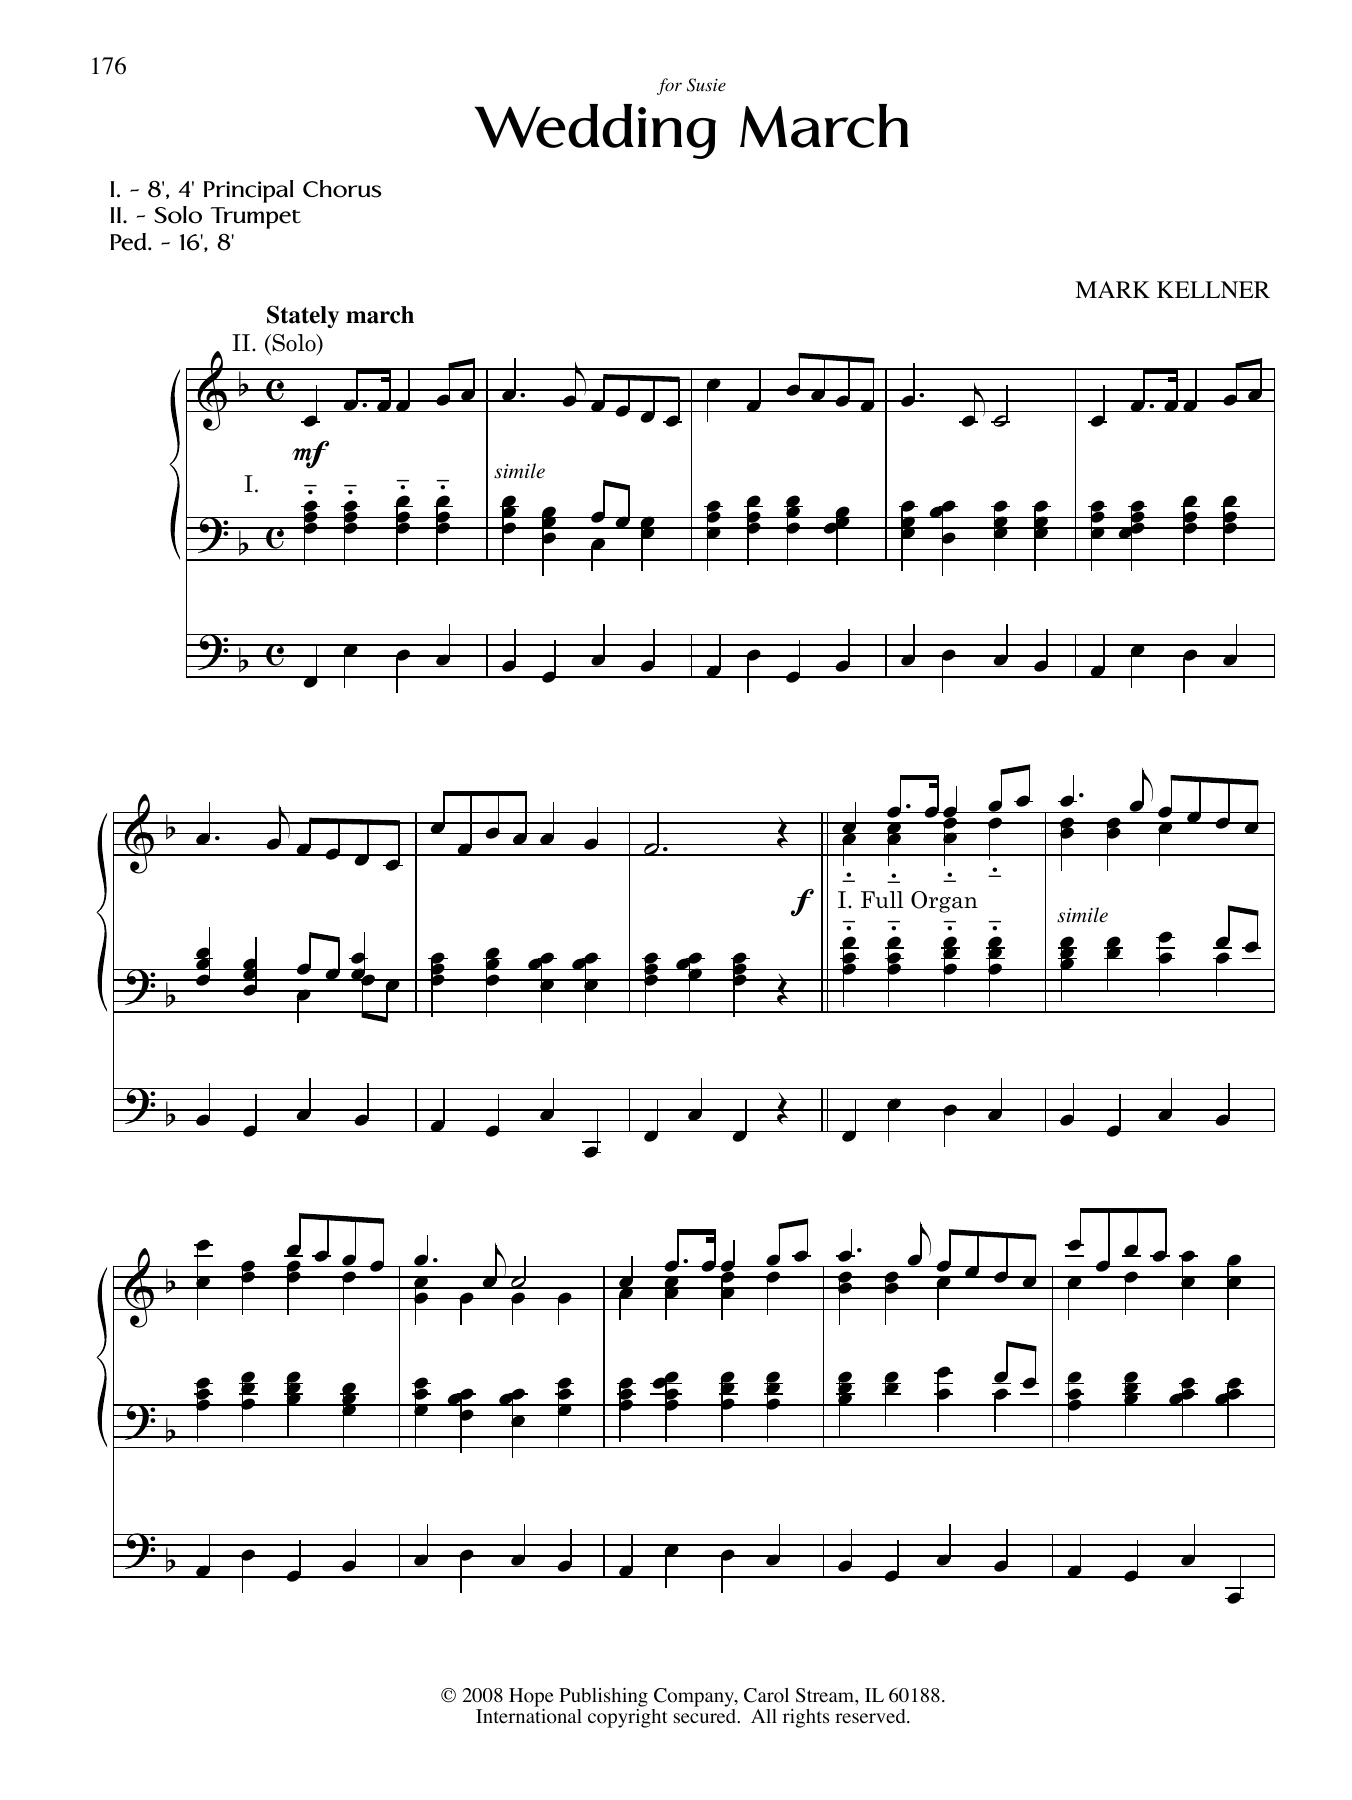 Mark Kellner Wedding March Sheet Music Notes & Chords for Organ - Download or Print PDF